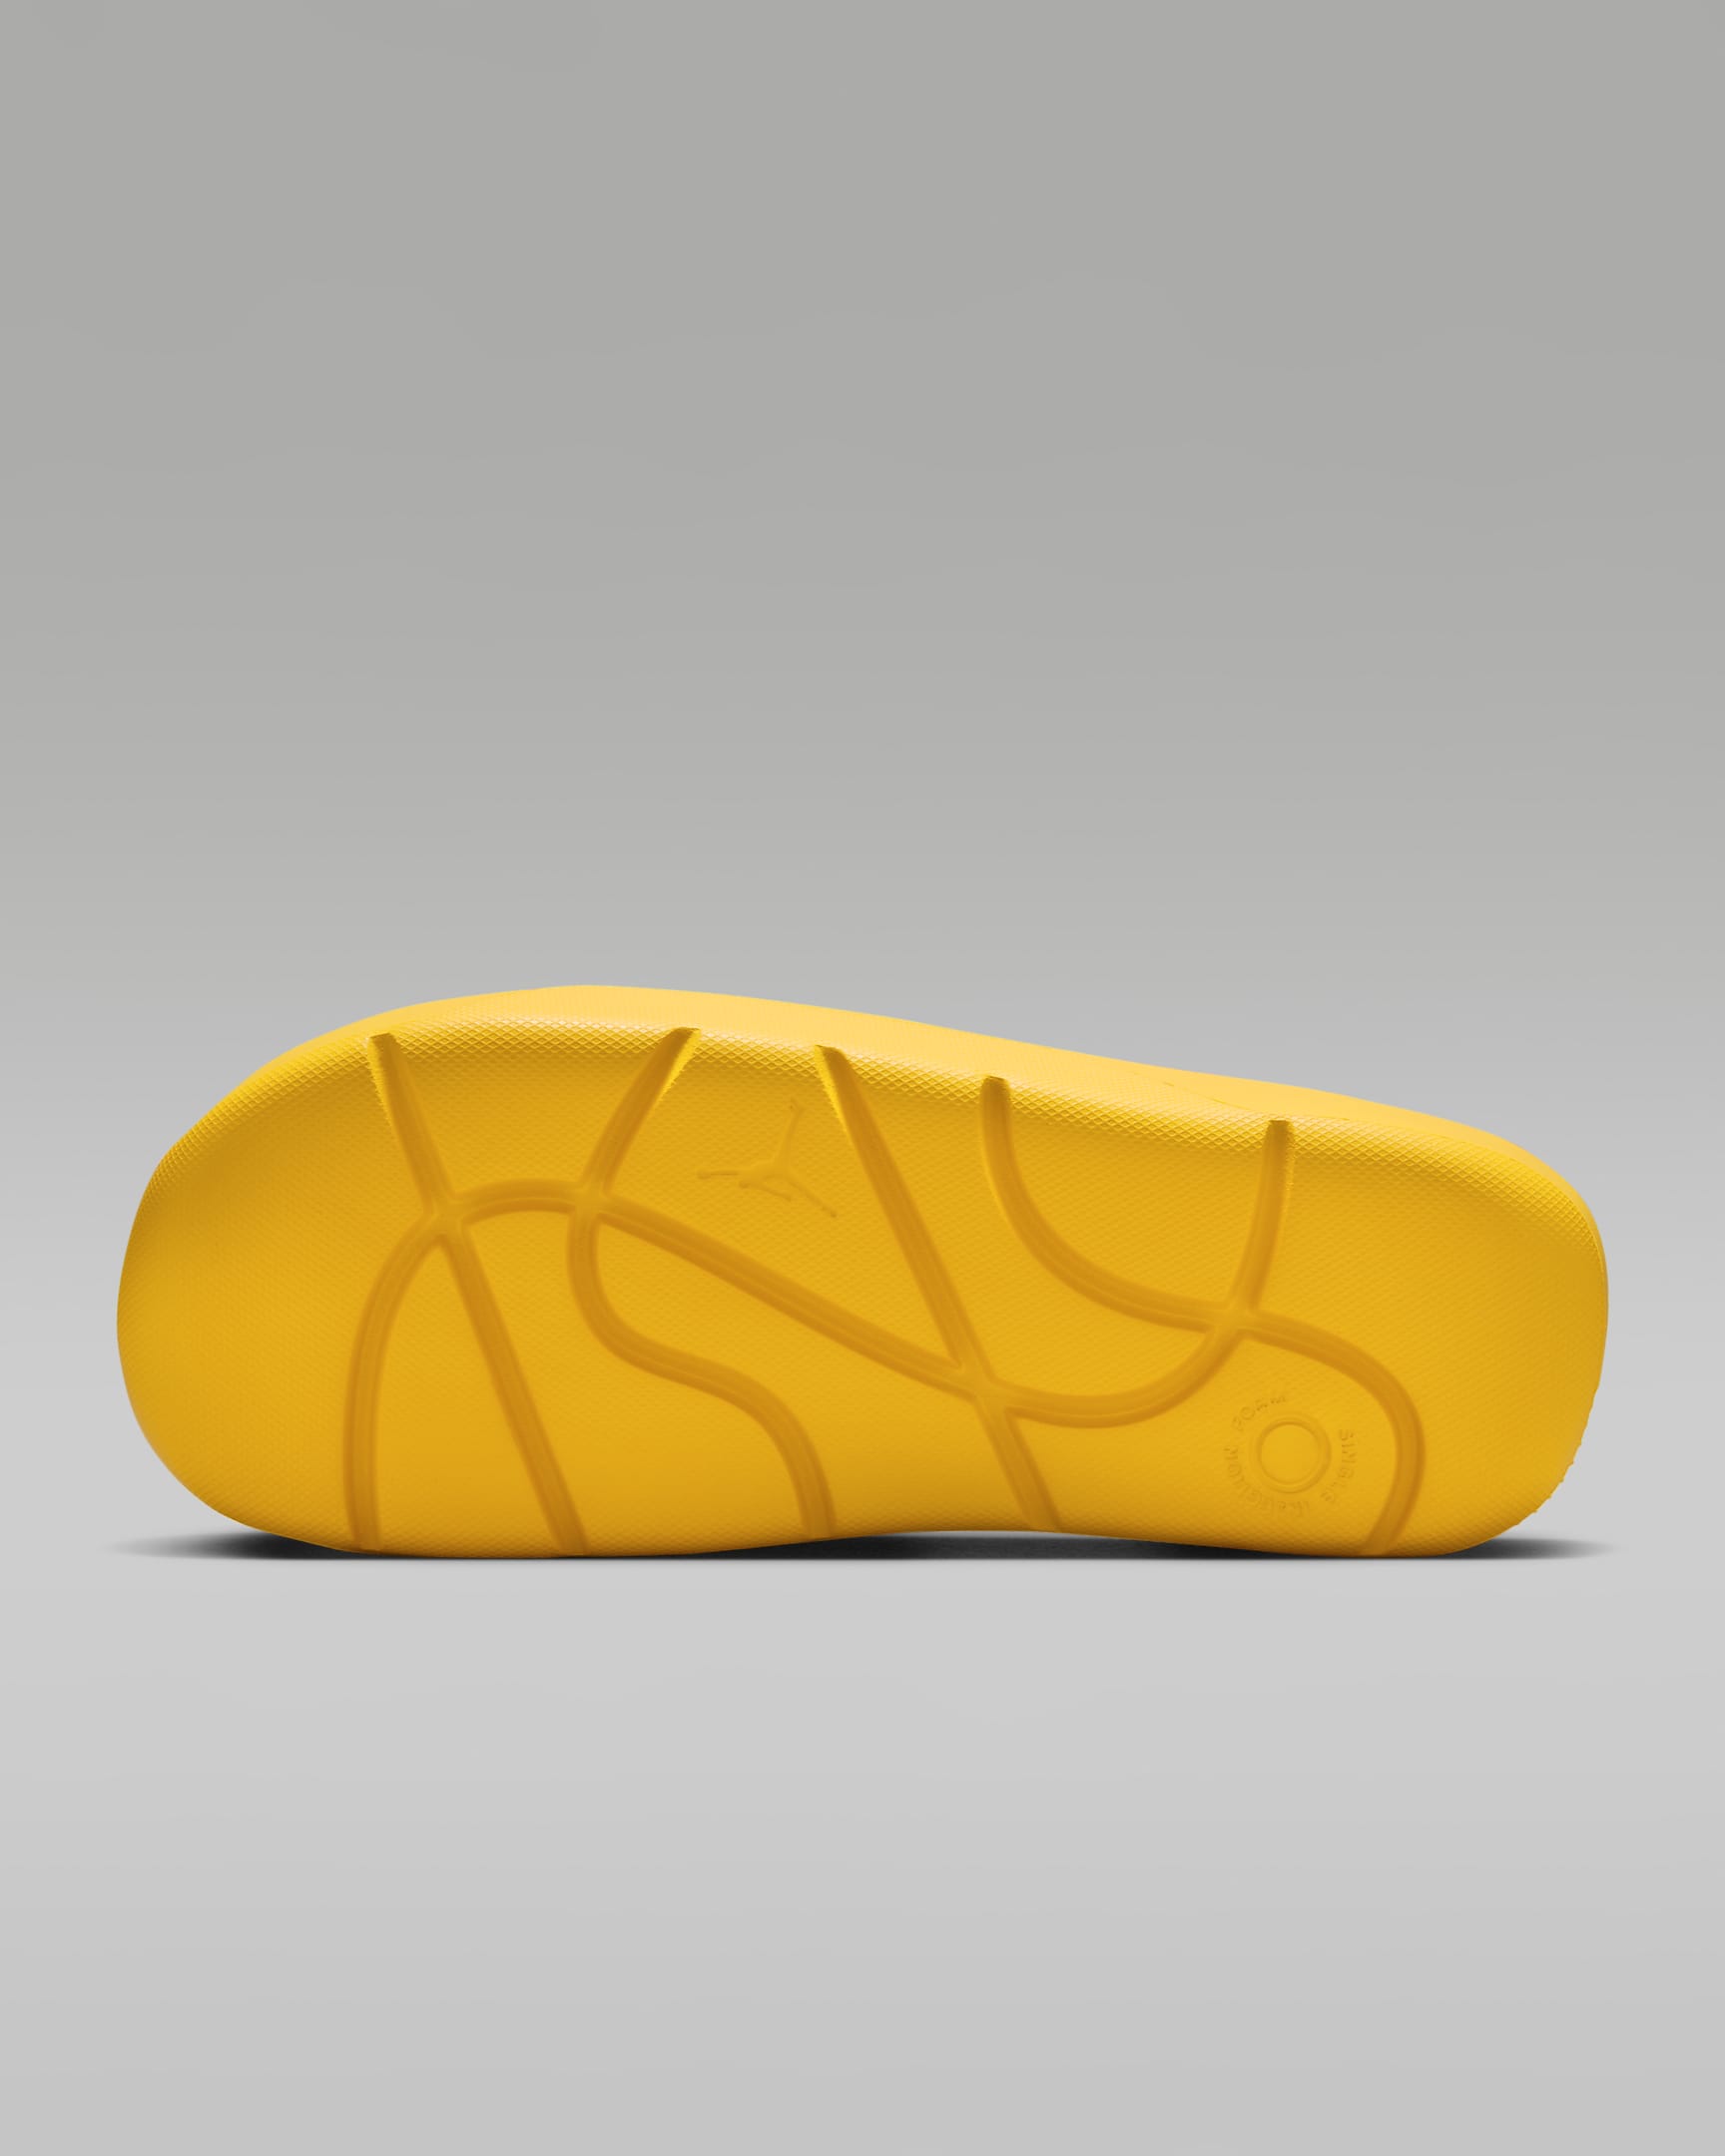 Jordan Post Men's Slides - Yellow Ochre/Yellow Ochre